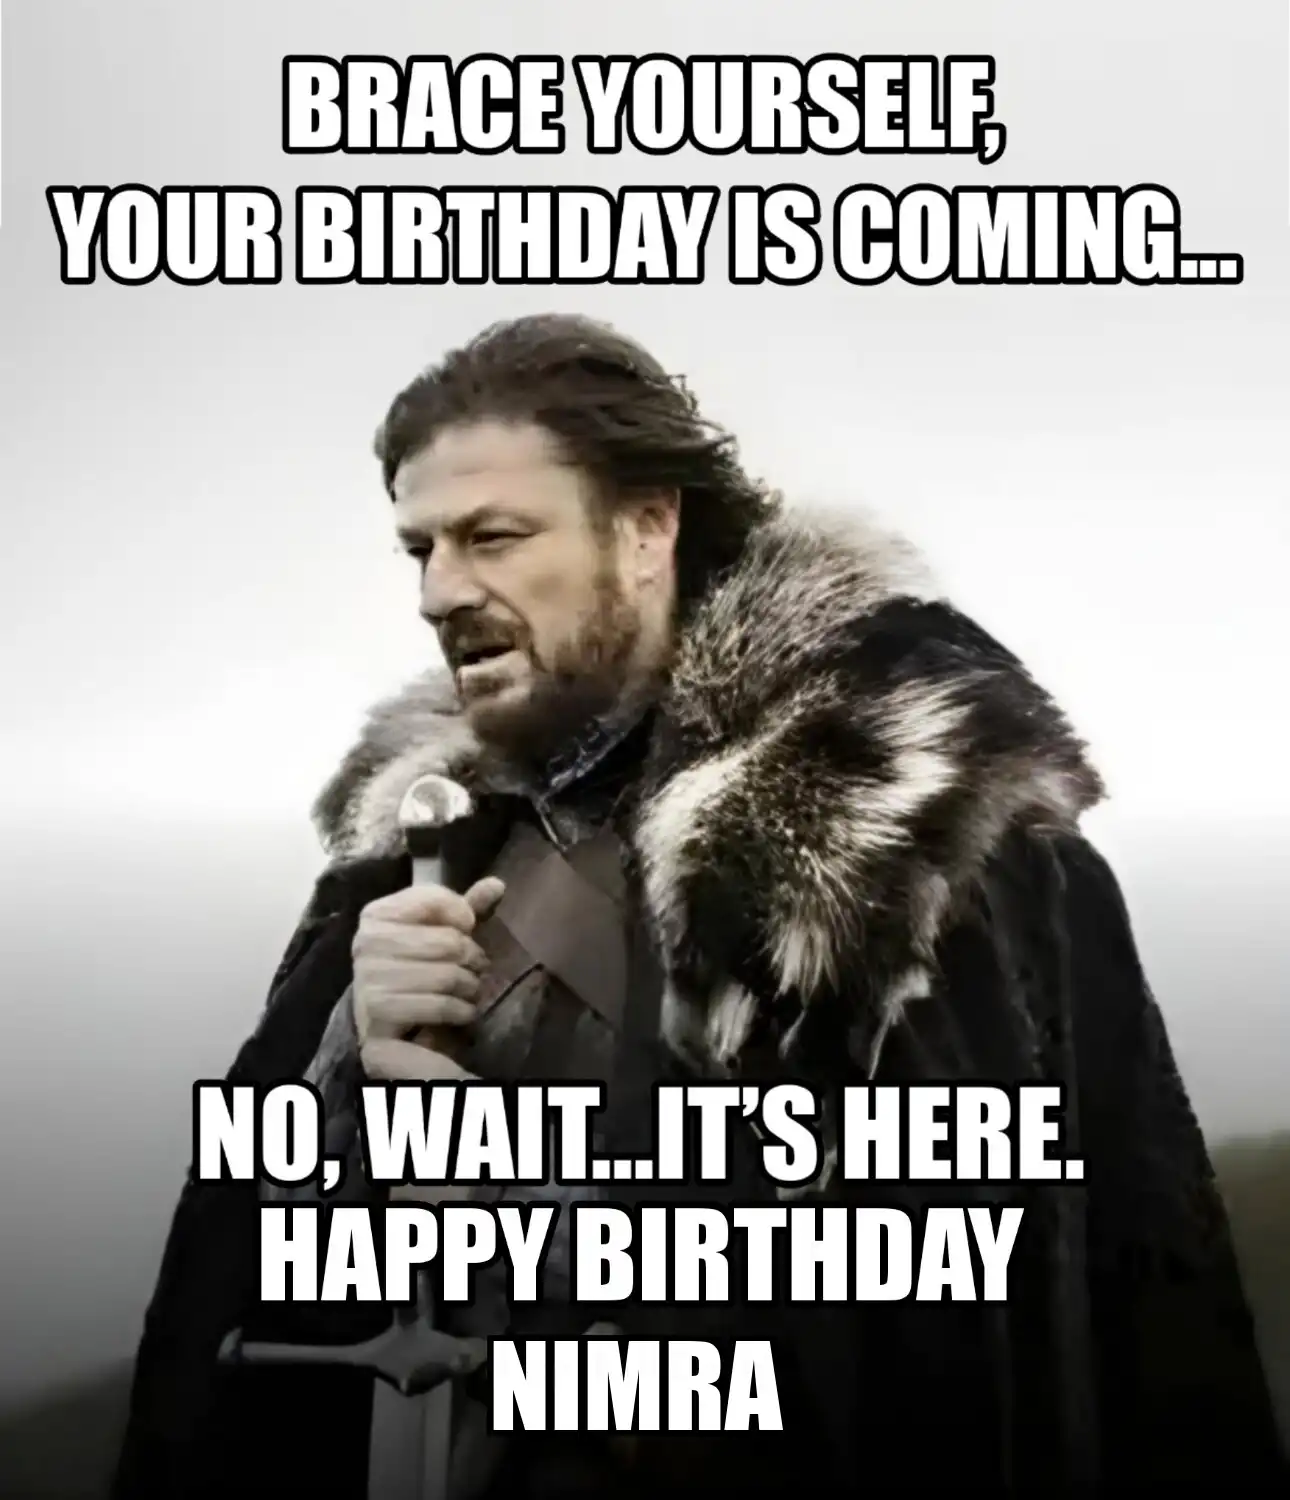 Happy Birthday Nimra Brace Yourself Your Birthday Is Coming Meme